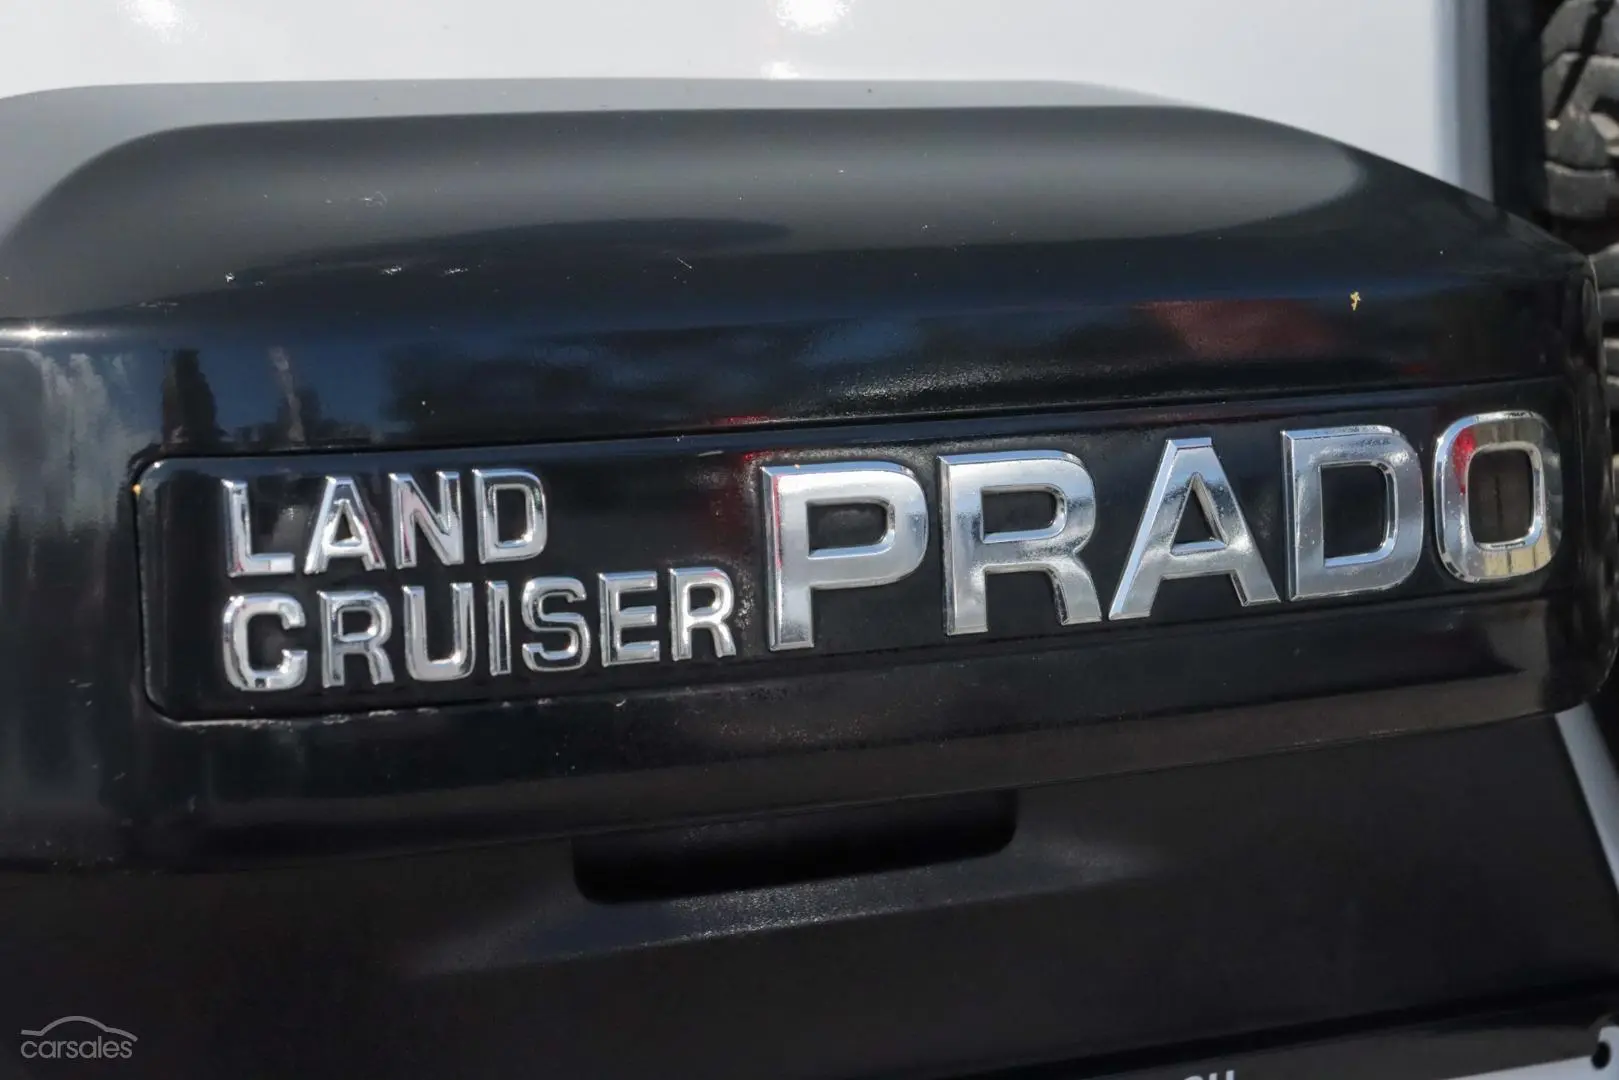 2019 Toyota Landcruiser Prado Image 23